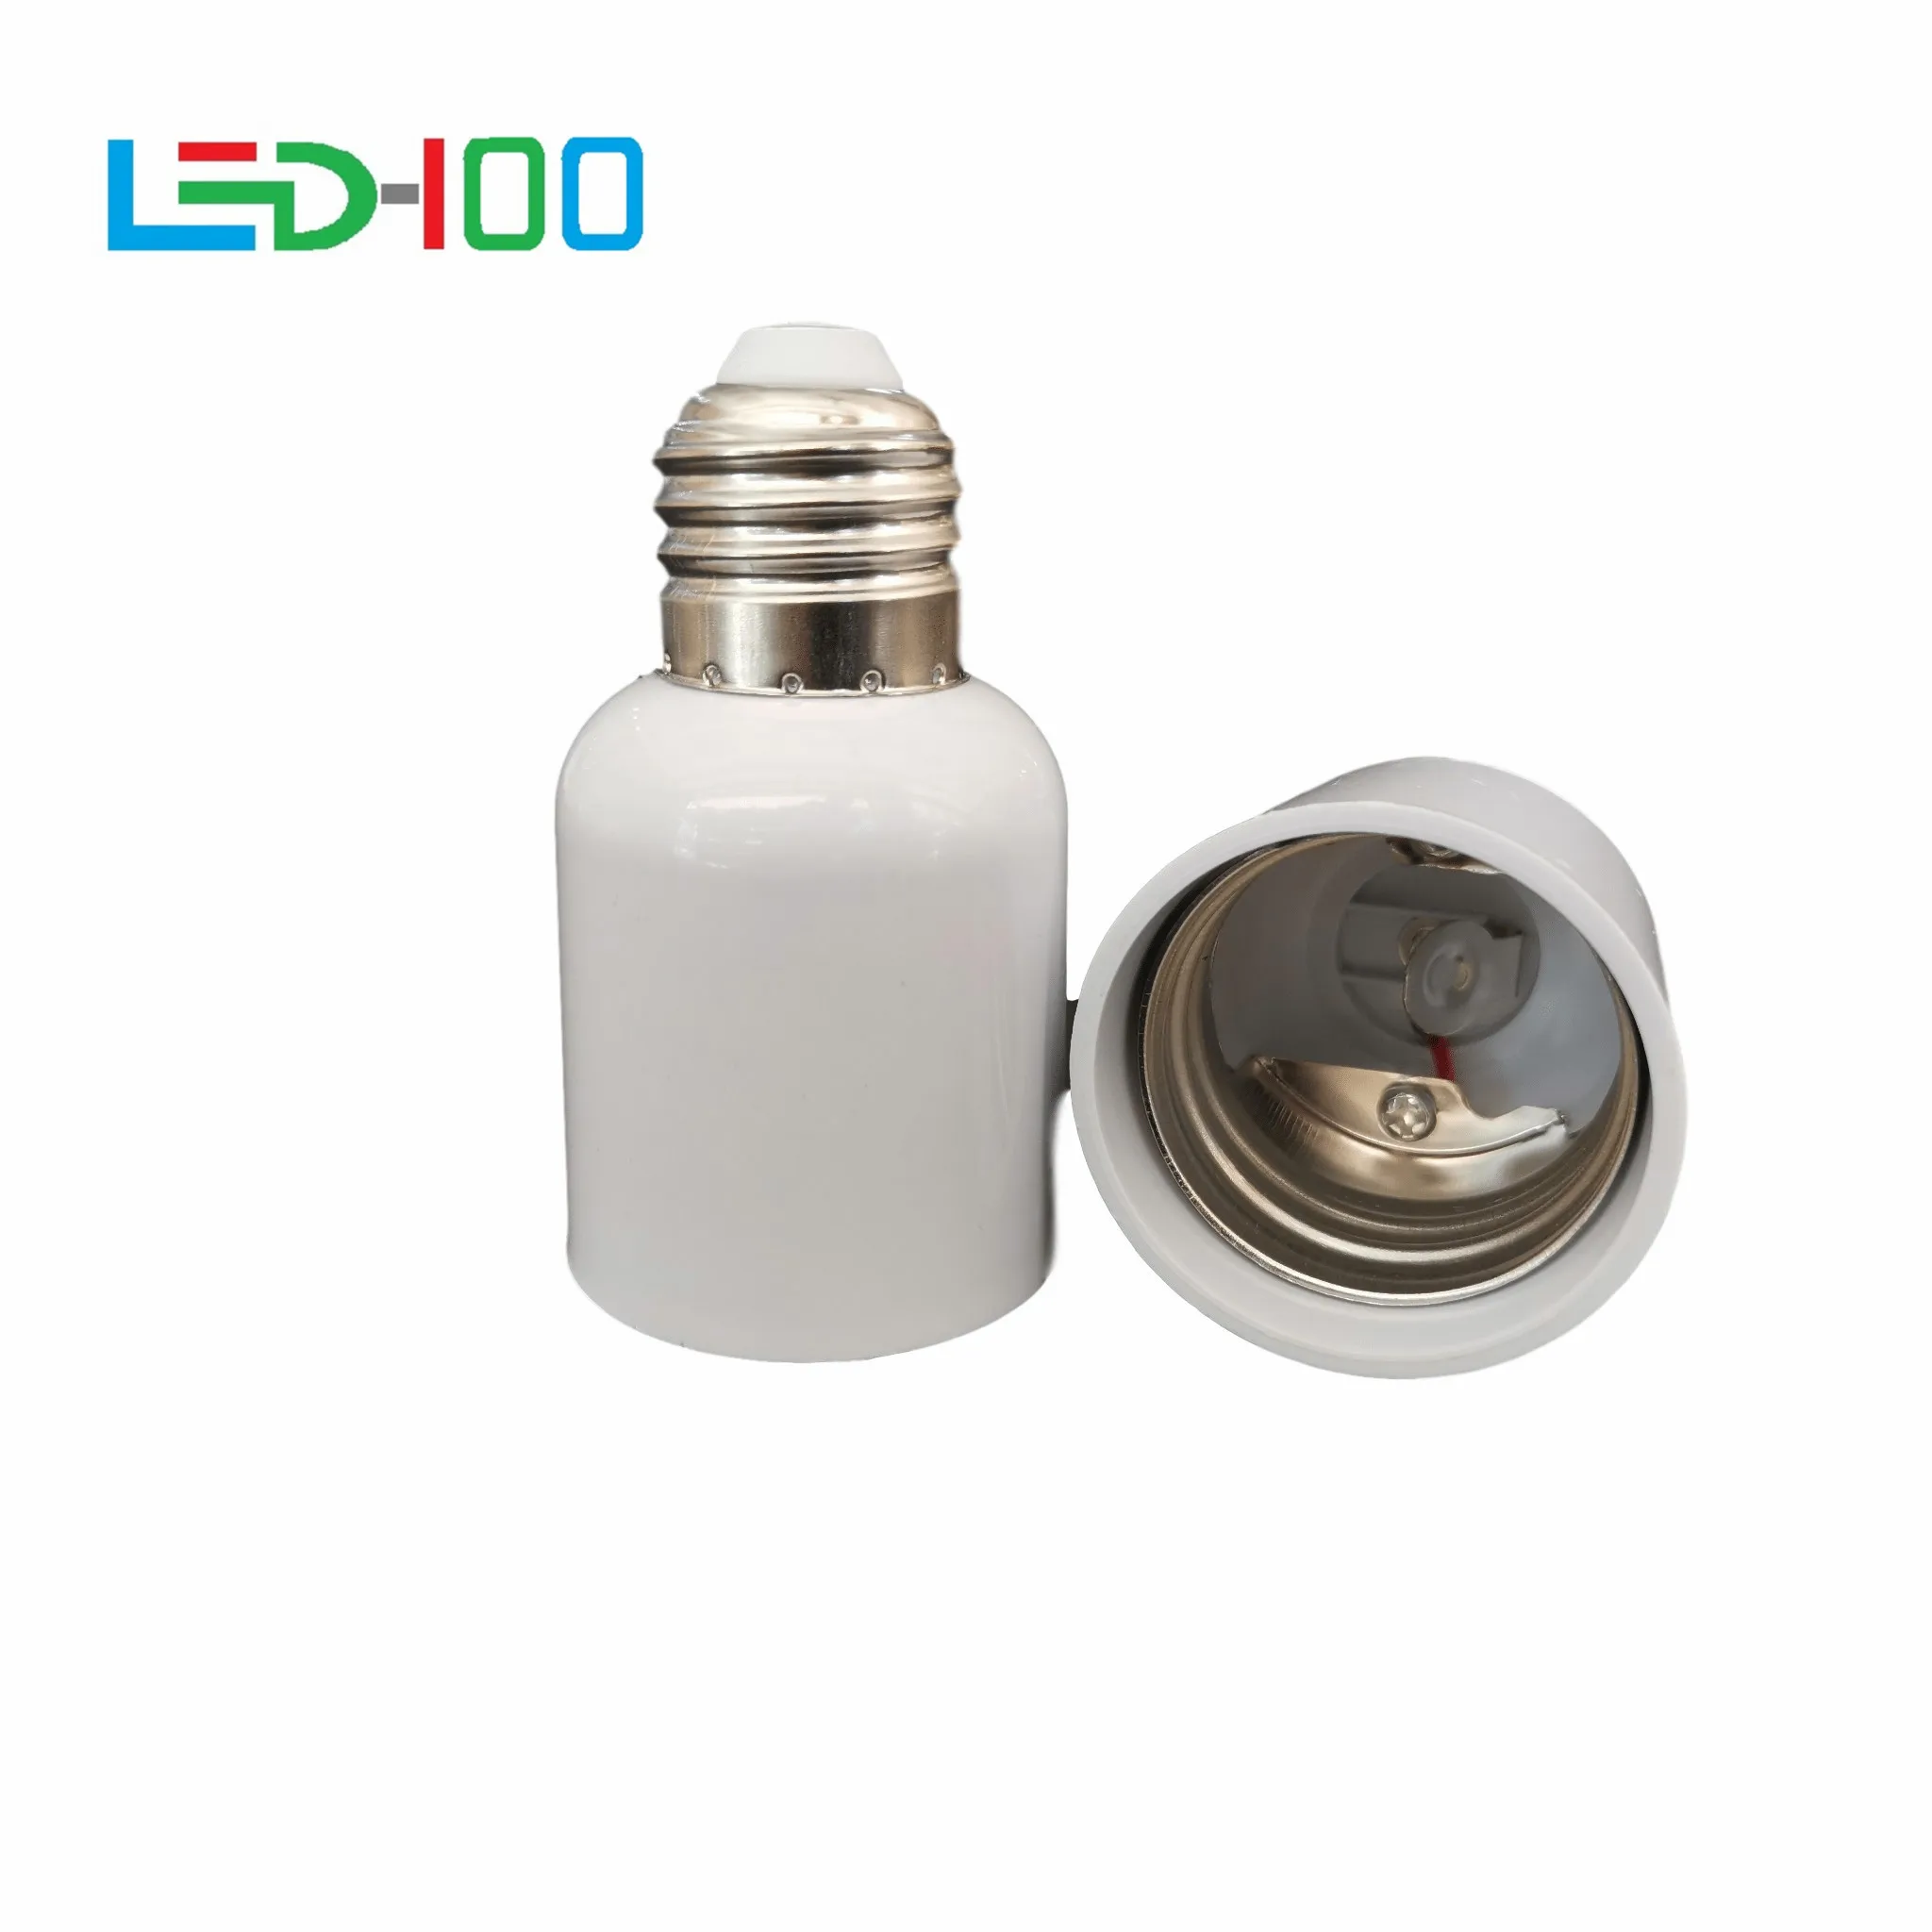 NEW E27 To E40 Bulb Heat Resistant Accessories Adapter Lamp Holder Converter Lightweight Medium Light Socket